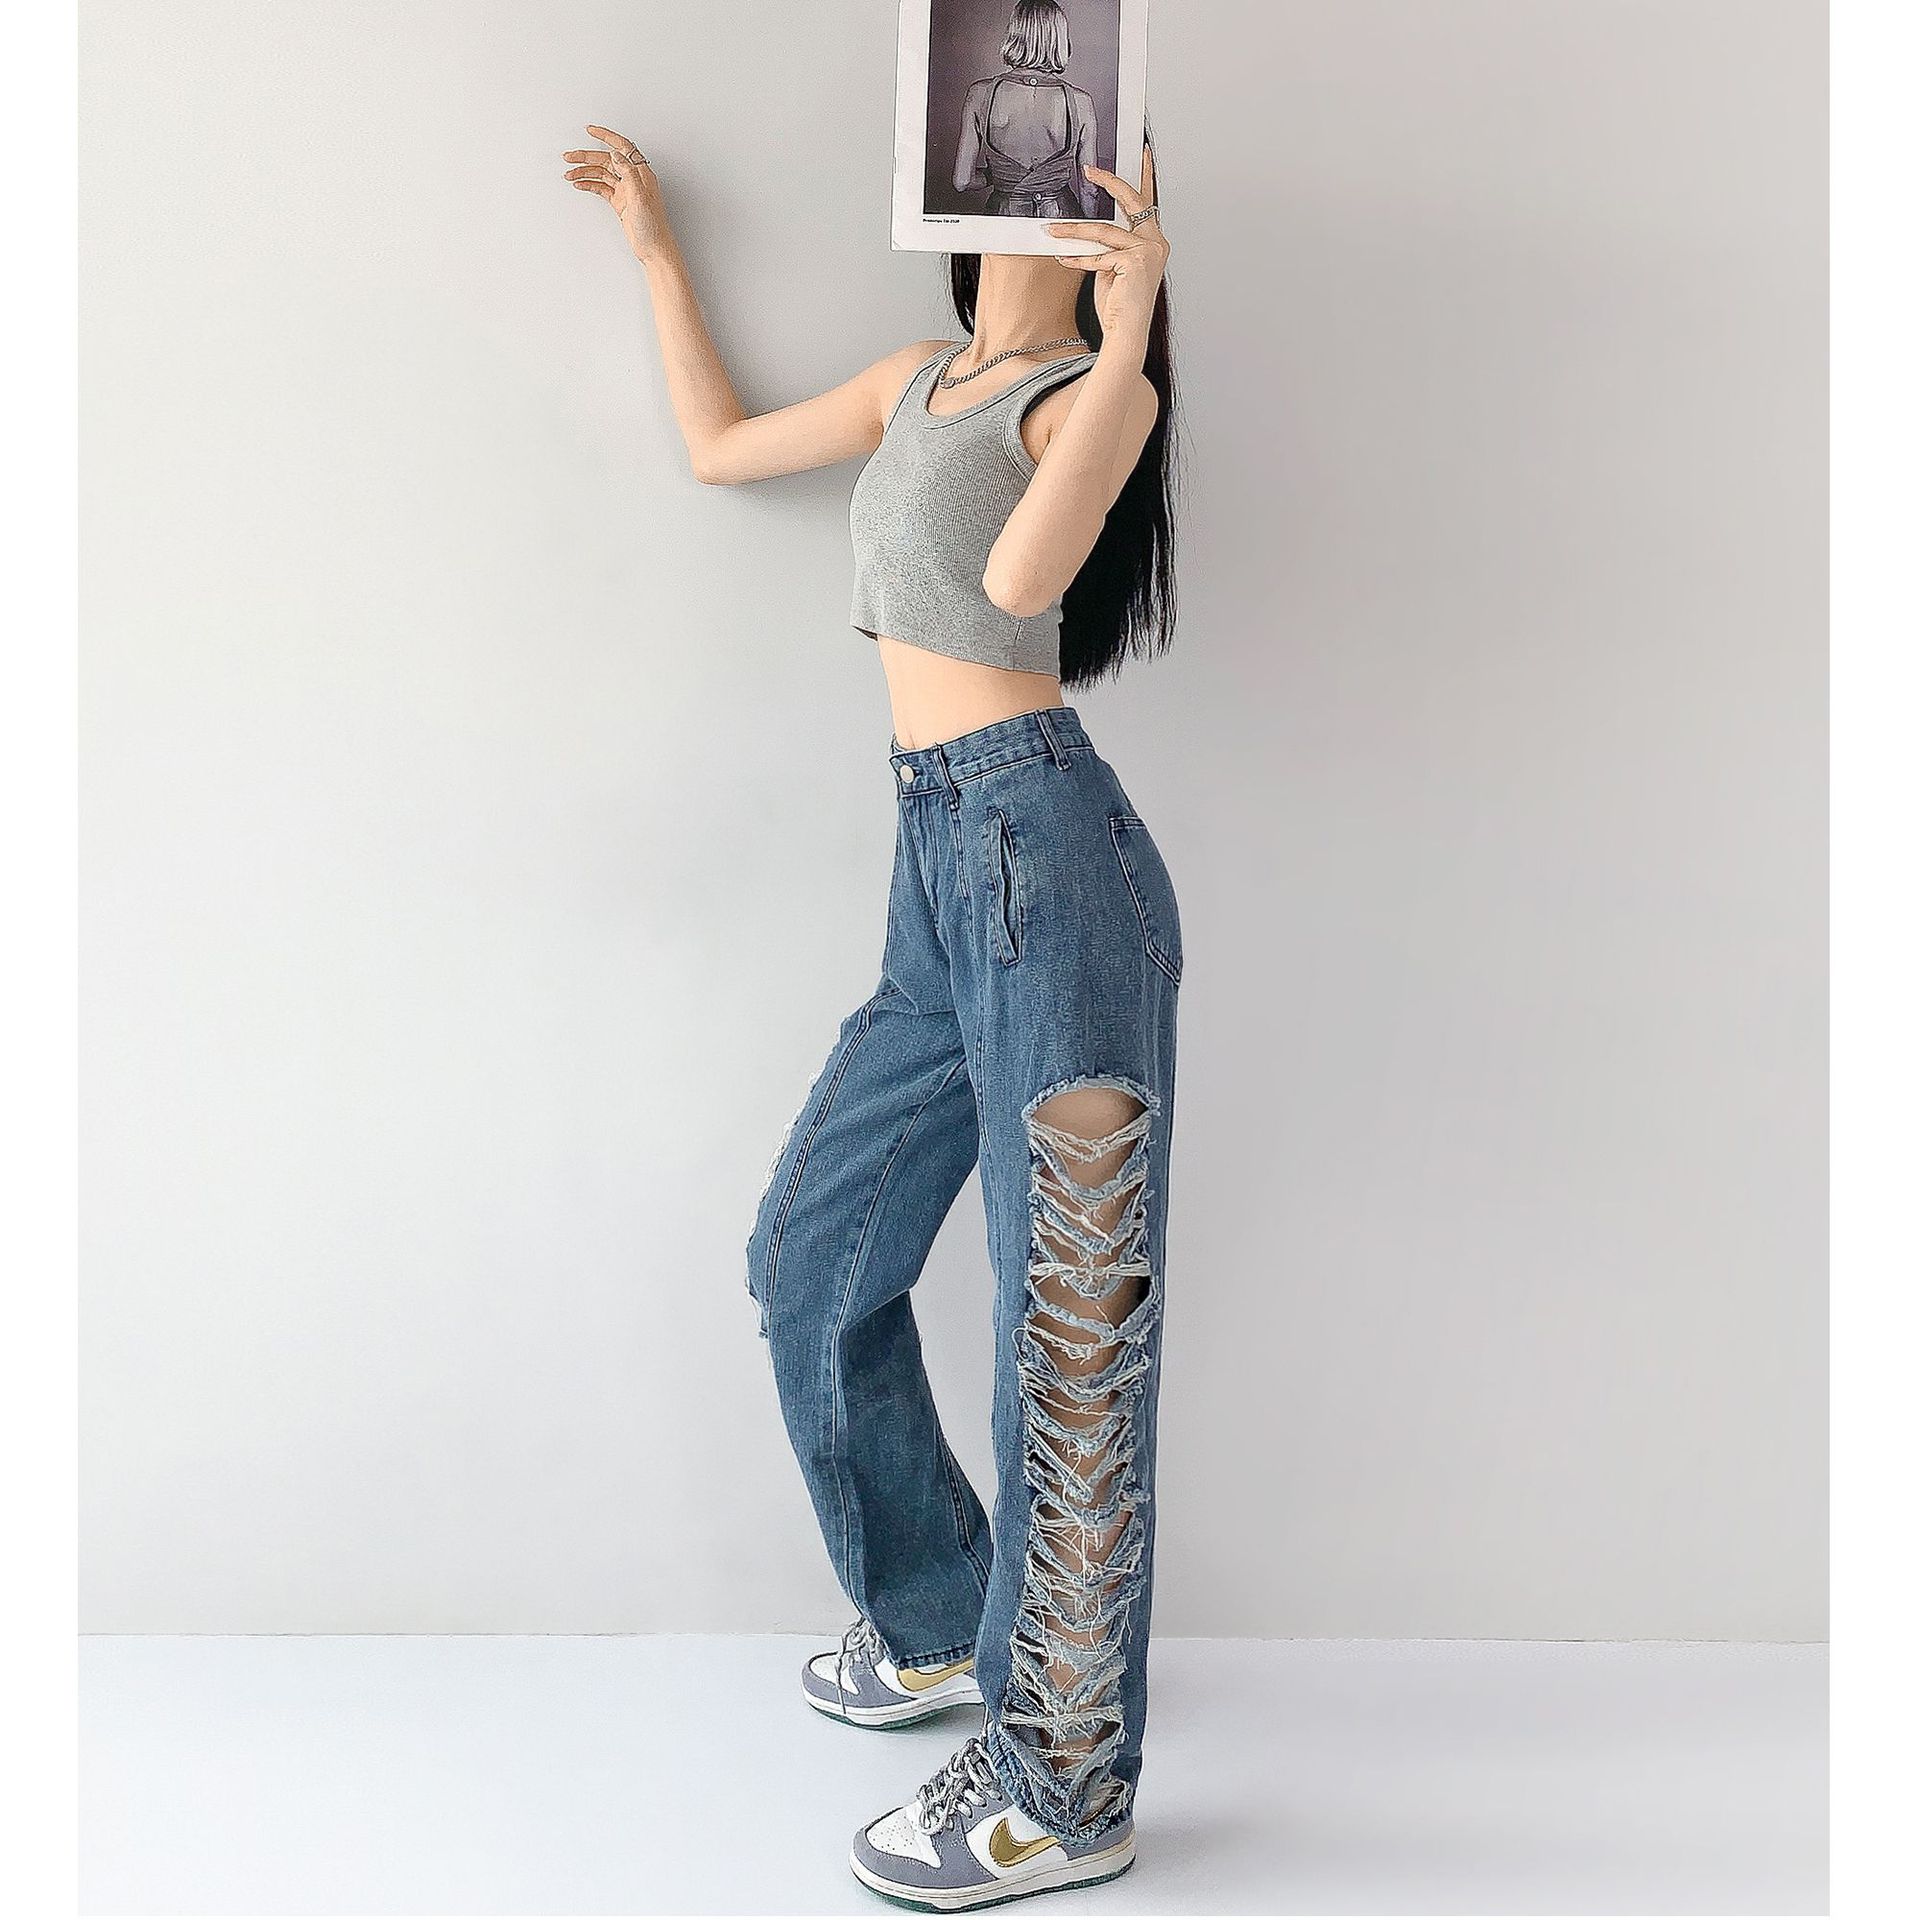 American Style Hot Girl Ripped Jeans Women's Autumn New Design Sense Wide-Leg Pants High Street Straight Pants Fashion